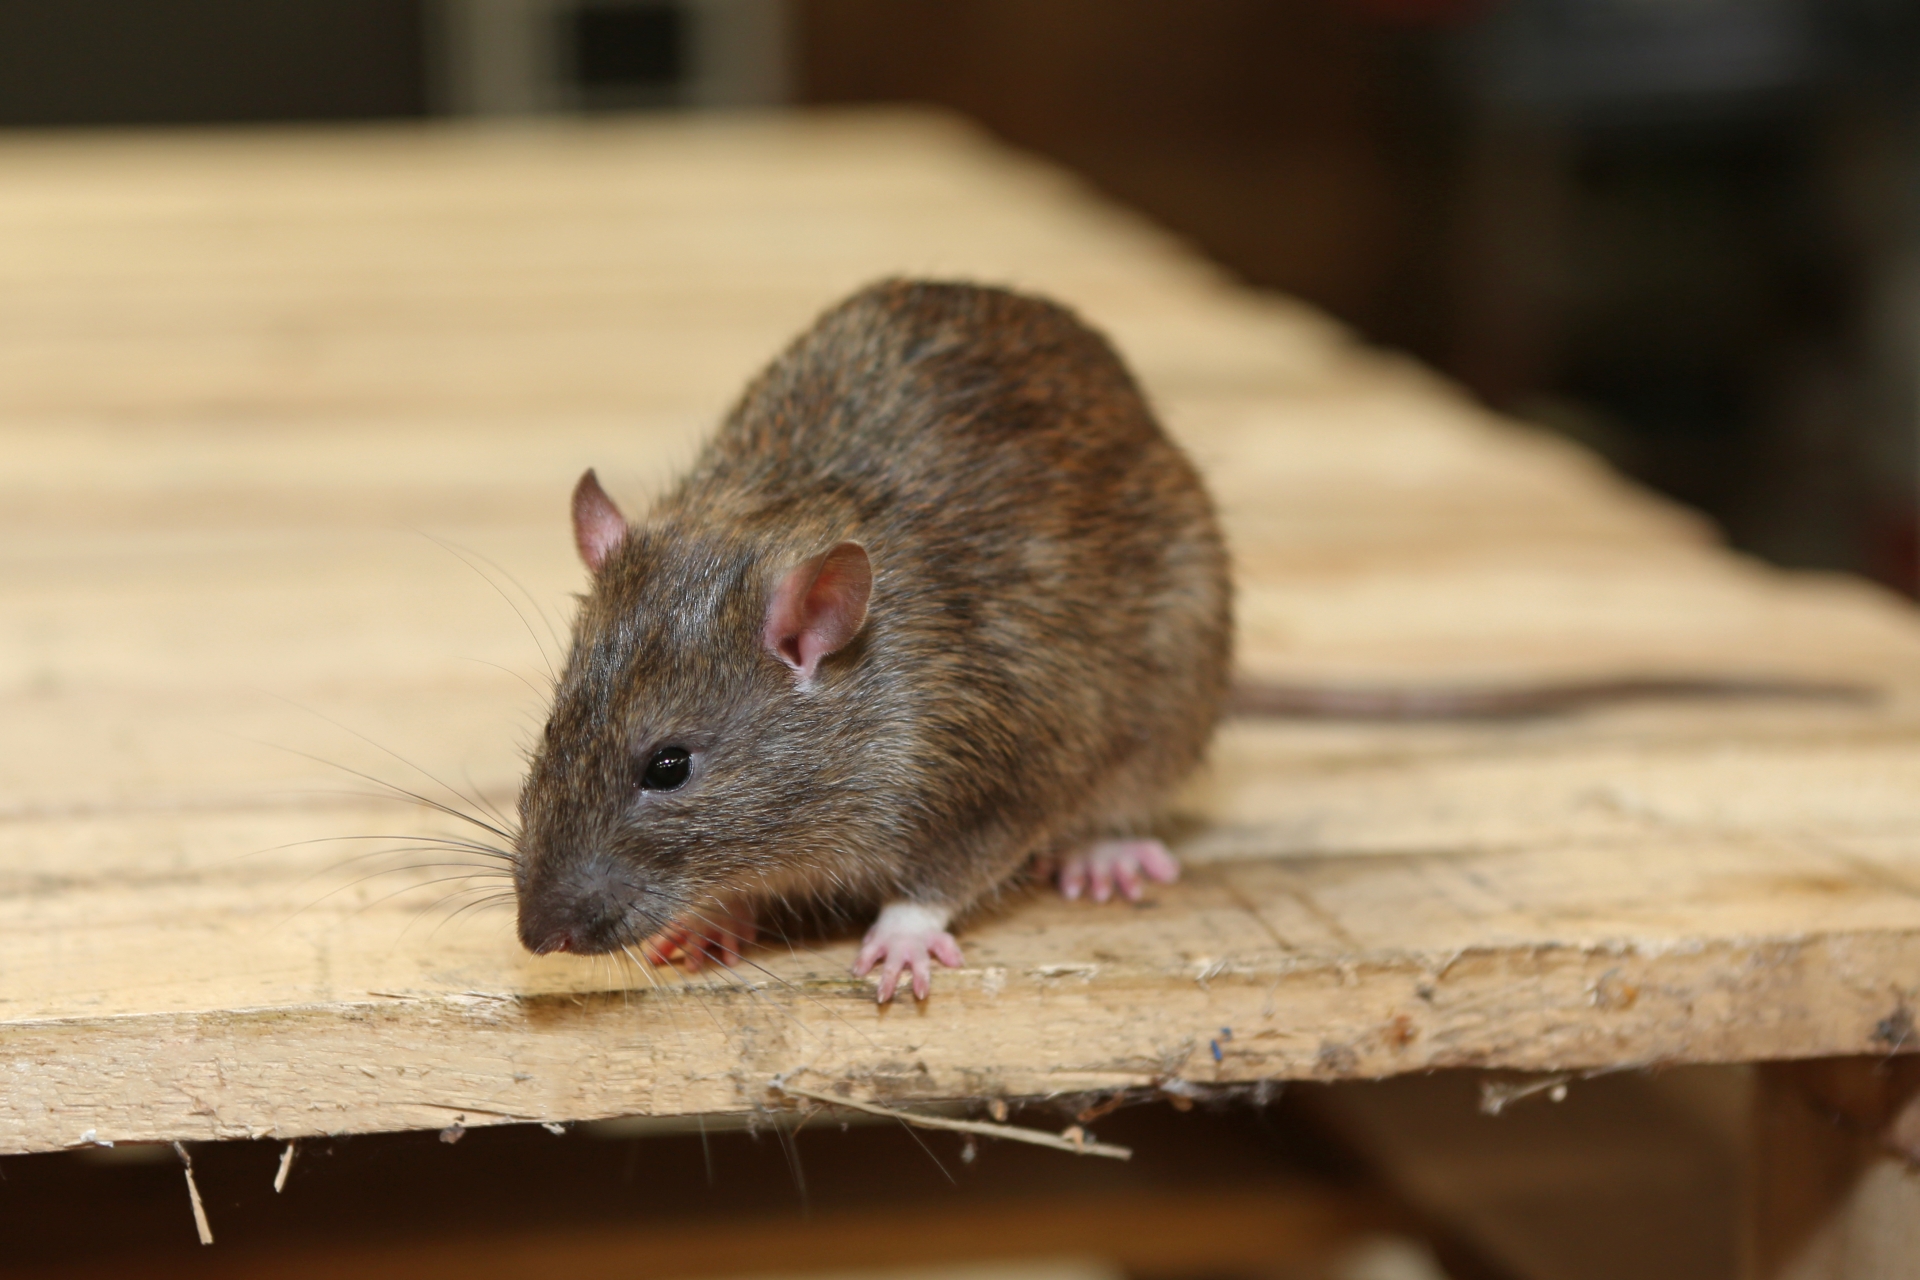 Rat extermination, Pest Control in Teddington, Fulwell, TW11. Call Now 020 8166 9746